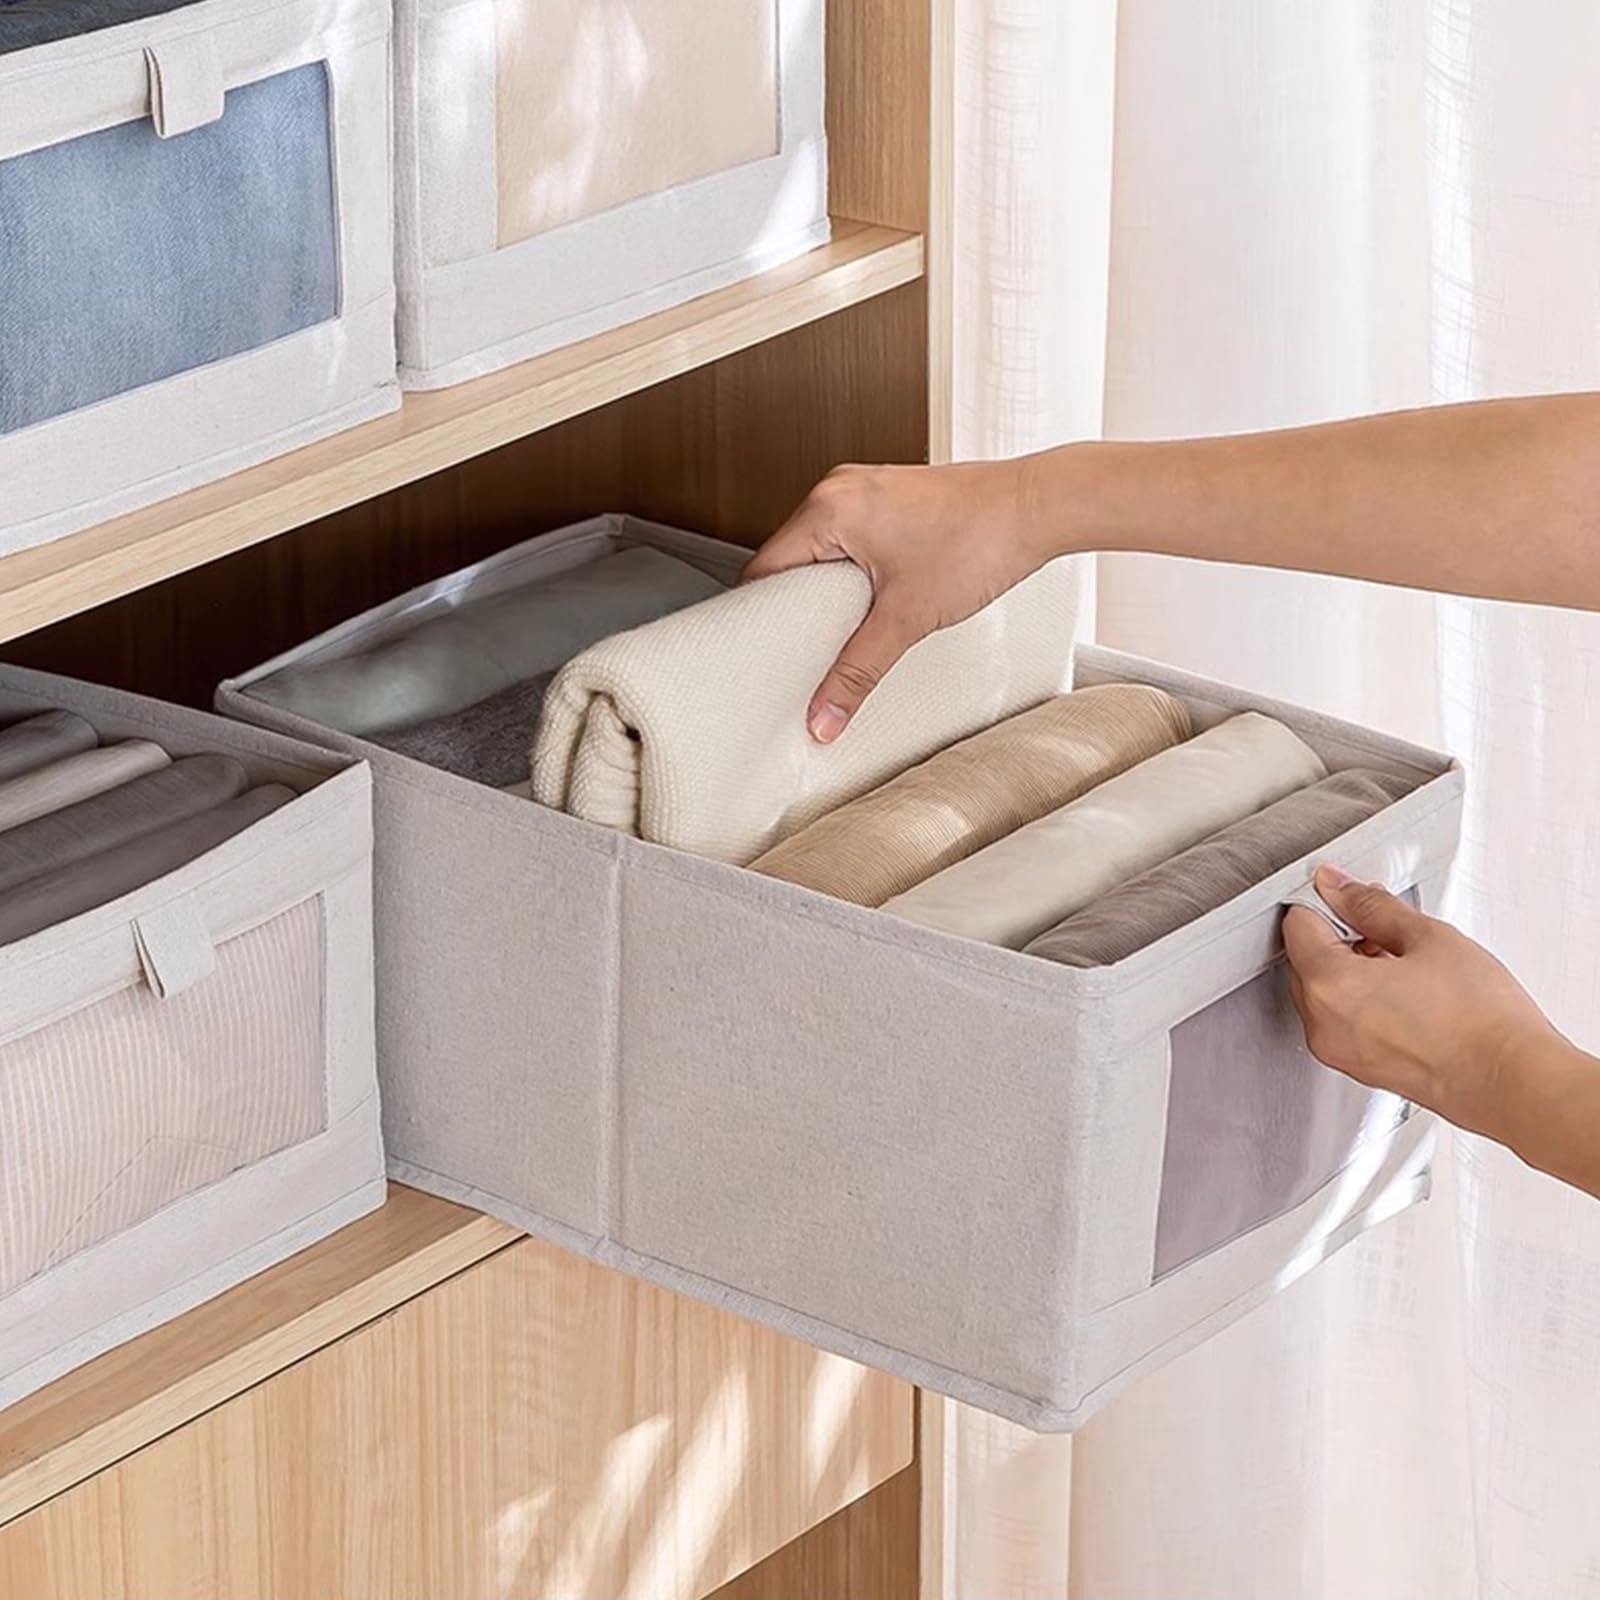 Home Storage and Organization - Storage Bins & Shelves